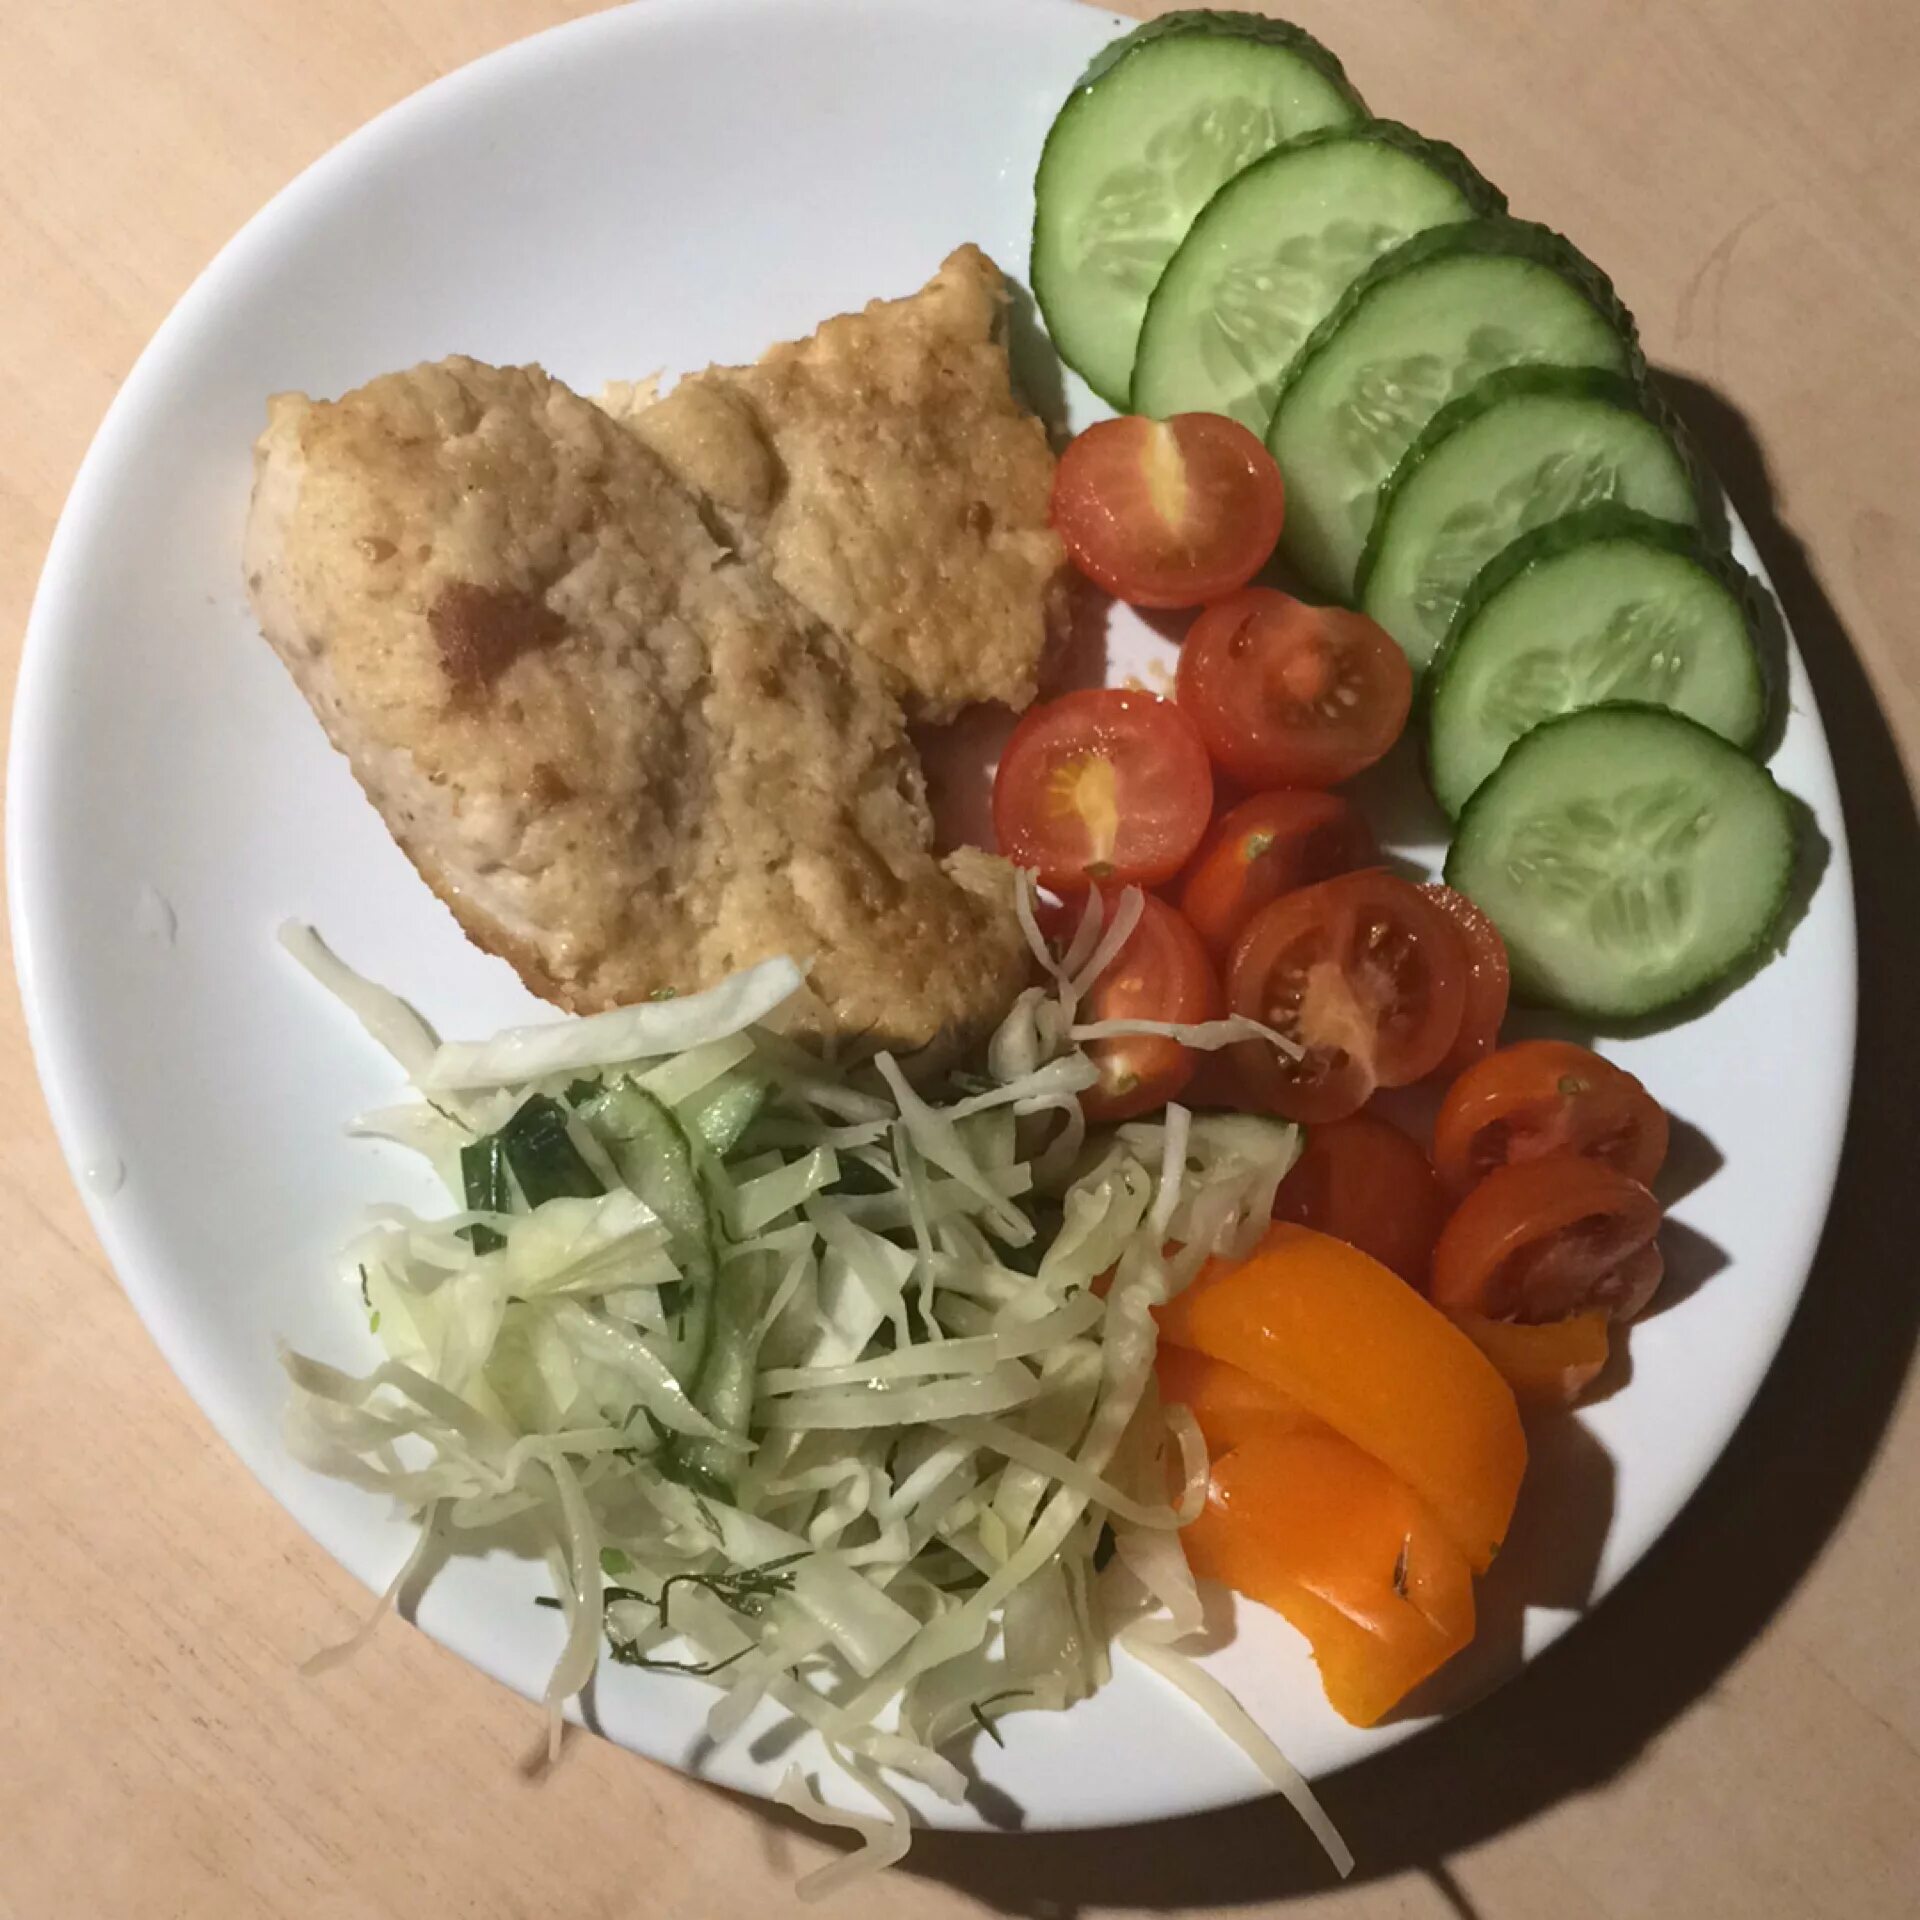 Vegetable lunch. Отварная куриная грудка с овощами. Отварная куриная грудка и овощной салат. Куриная грудка с овощным салатом. Курочка отварная с овощами.